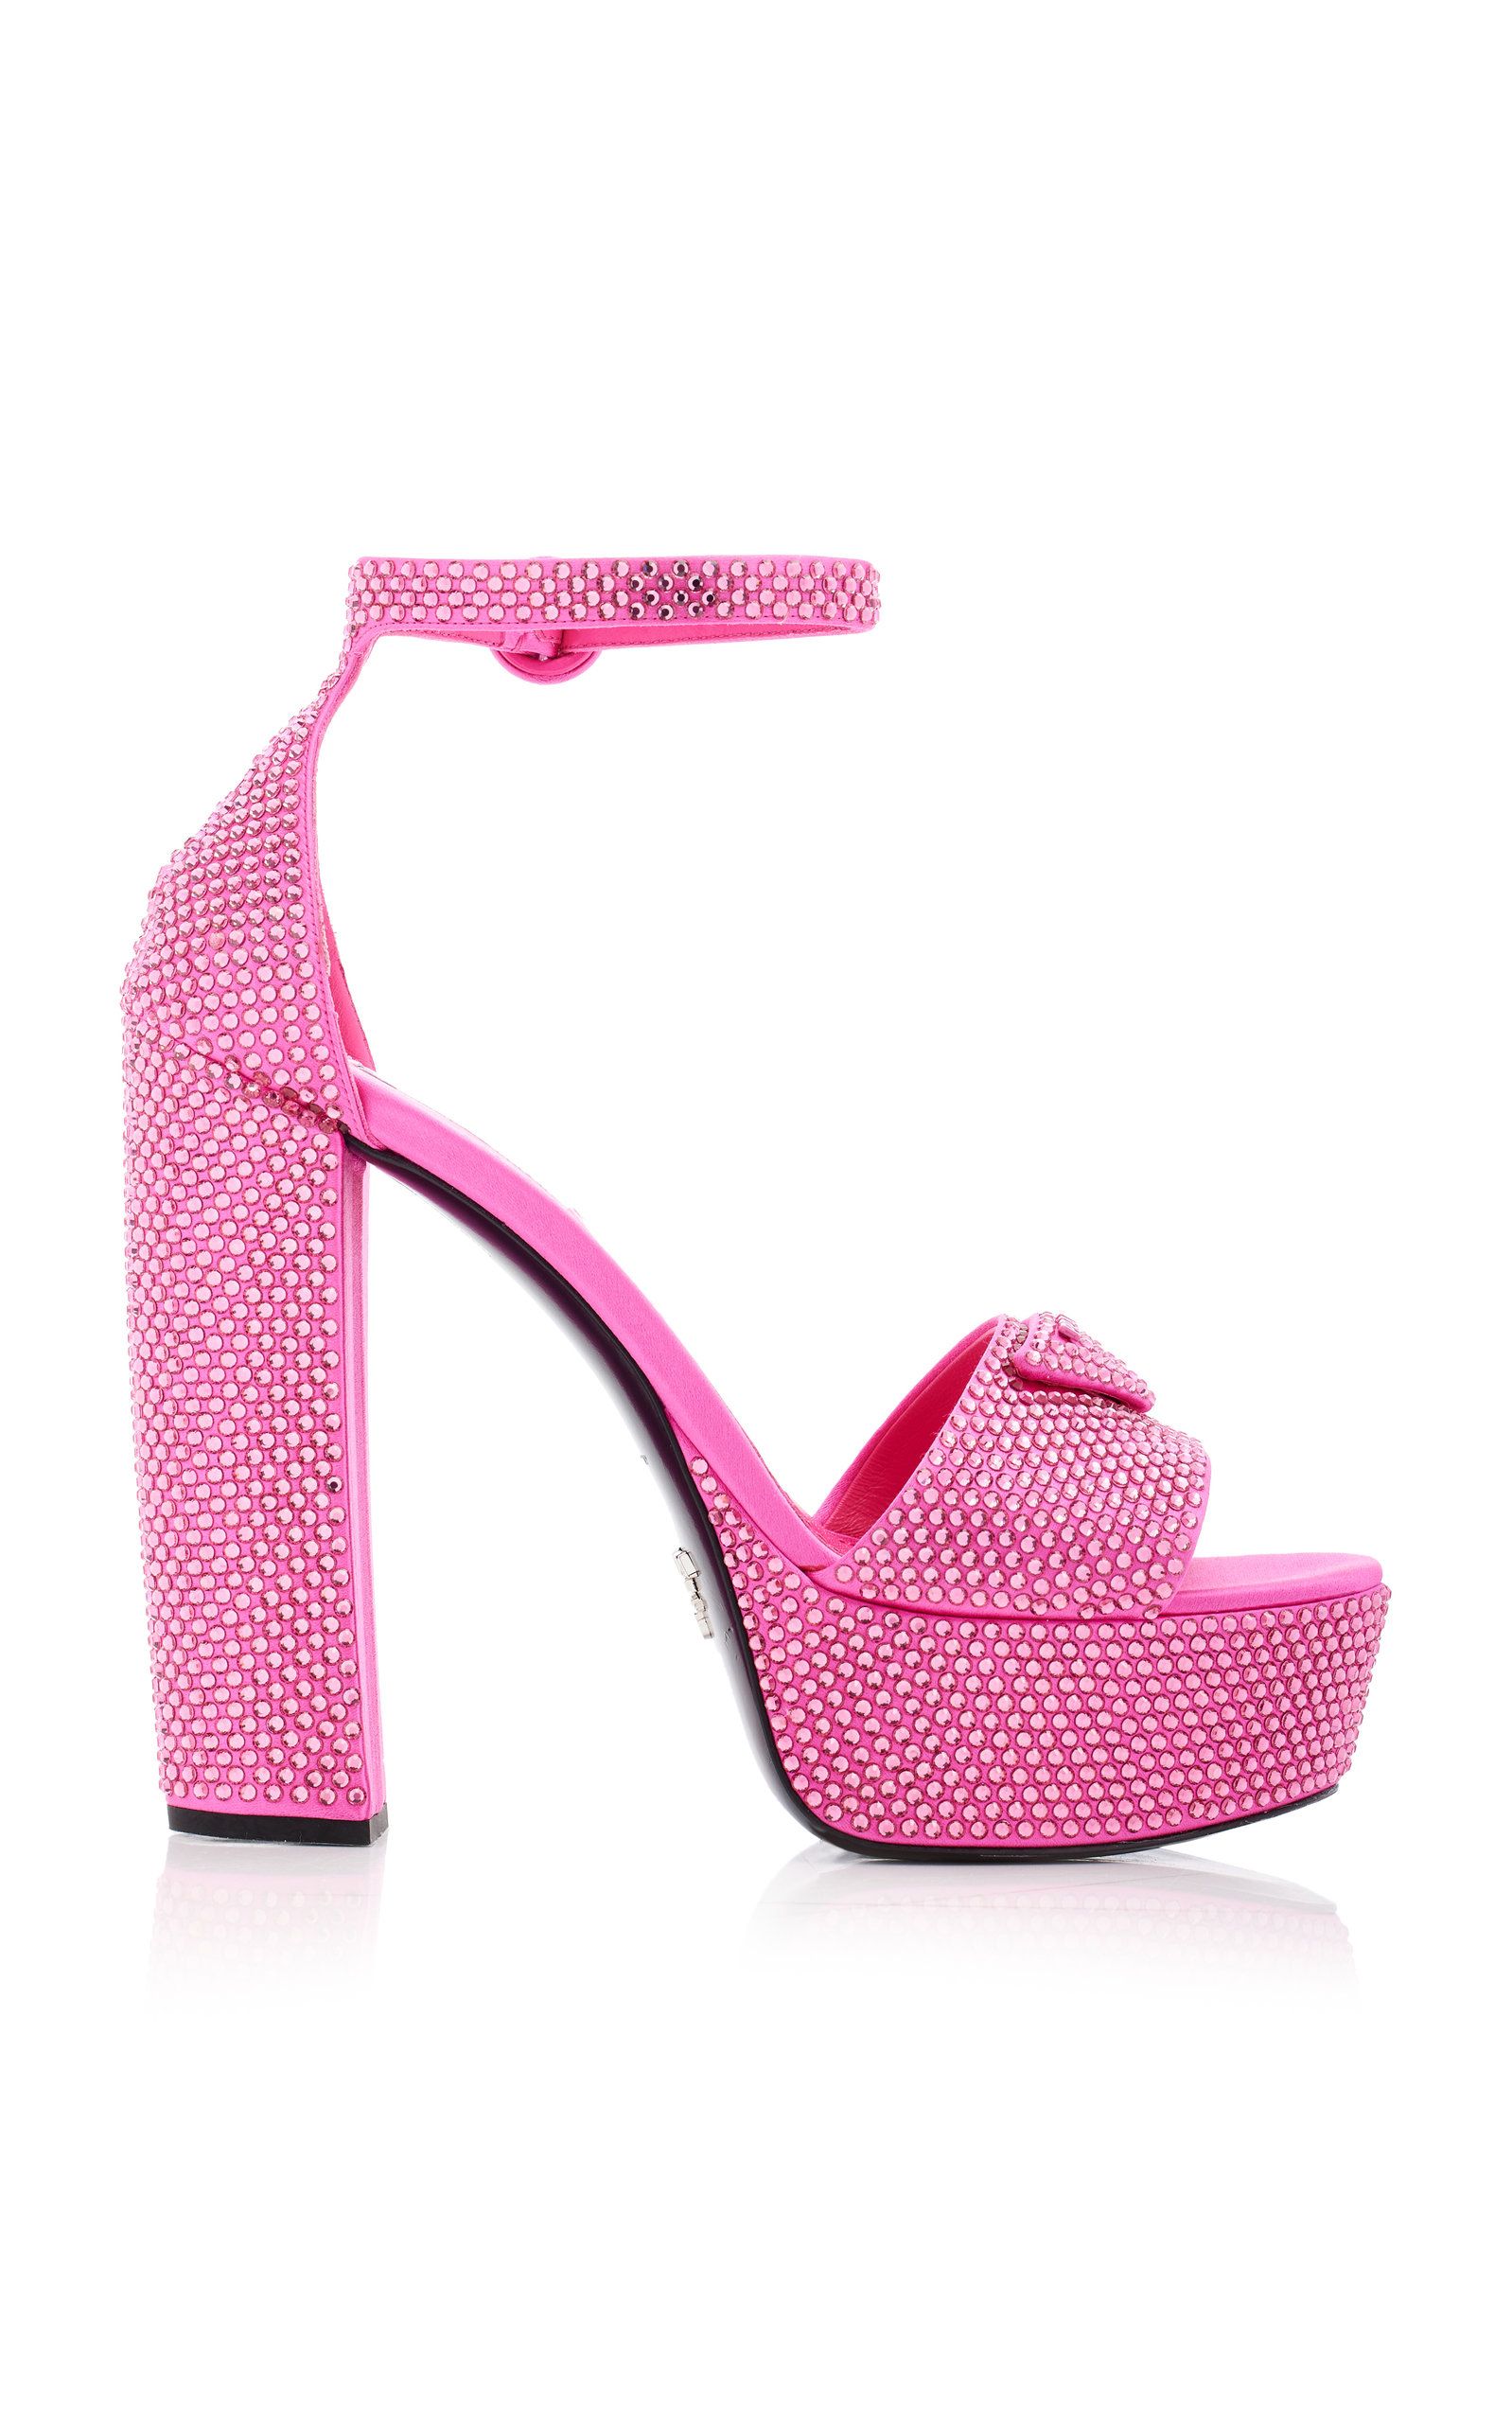 Prada - Women's Crystal-Embellished Satin Platform Sandals - Pink - IT 38.5 - Moda Operandi | Moda Operandi (Global)